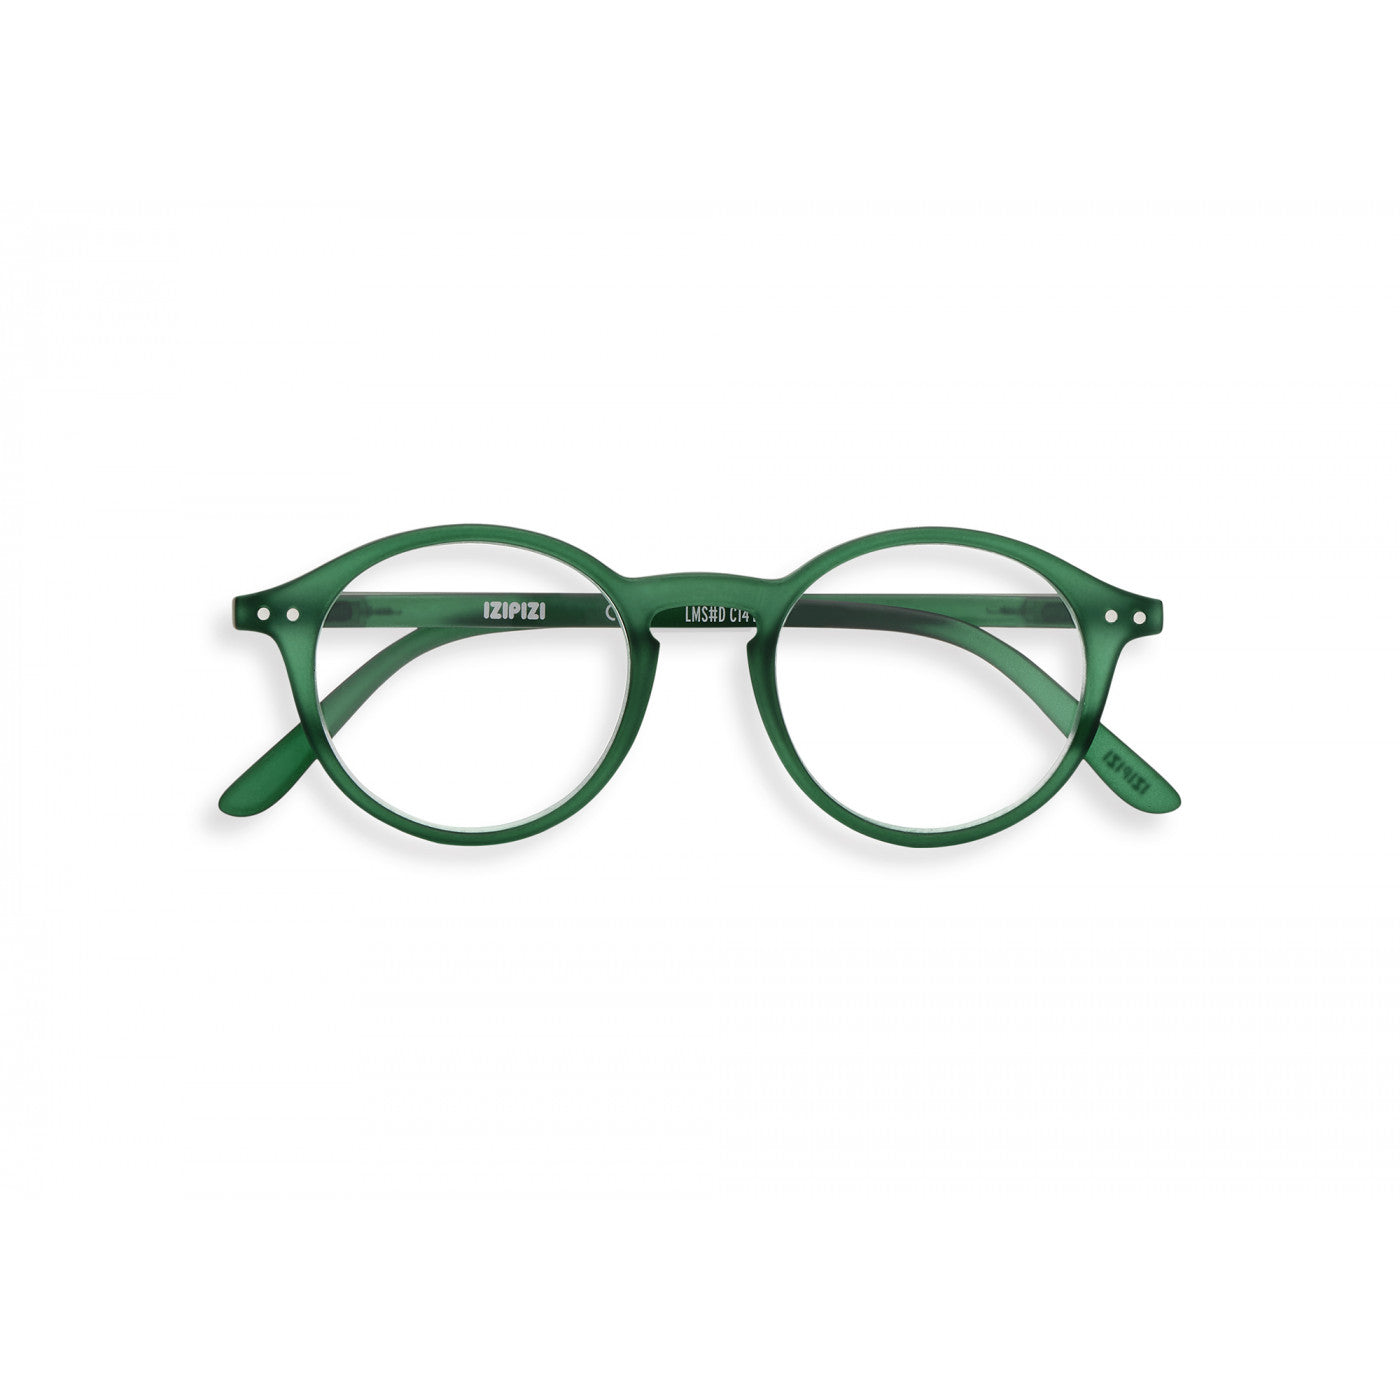 Izipizi Reading Glasses #D Crystal Green